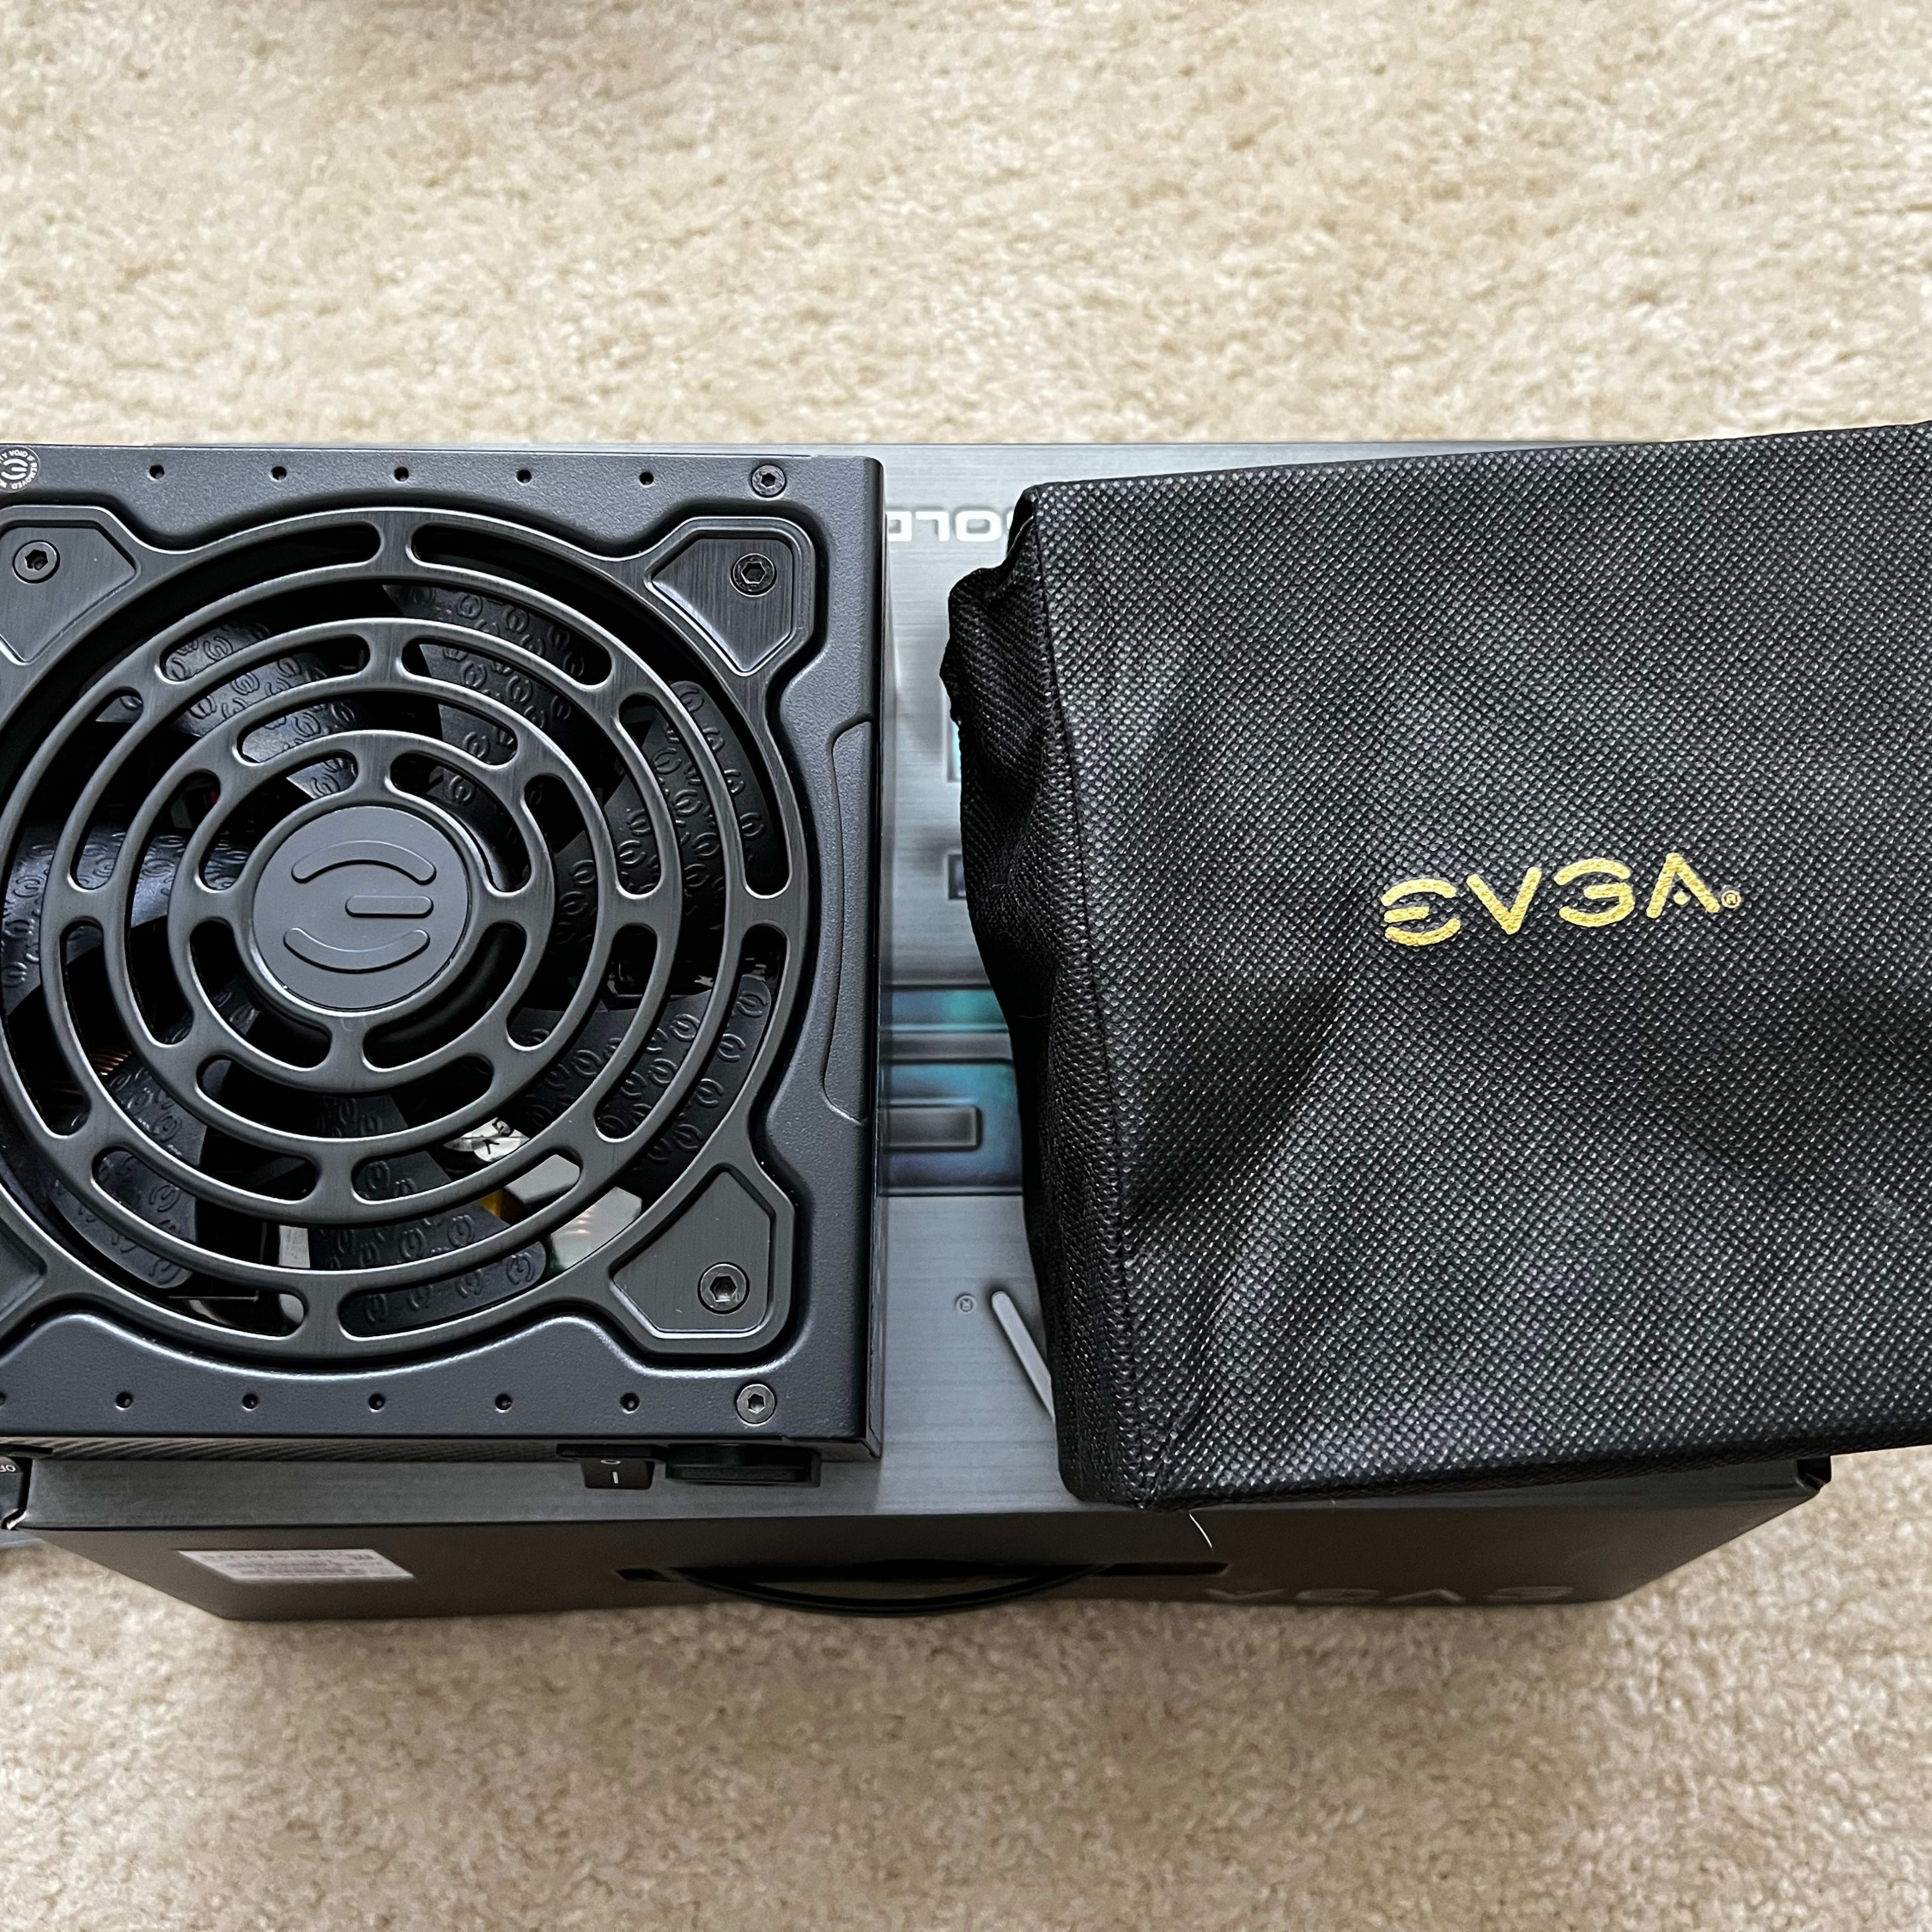 EVGA SuperNOVA 750 G3 750W Gold PSU w/box